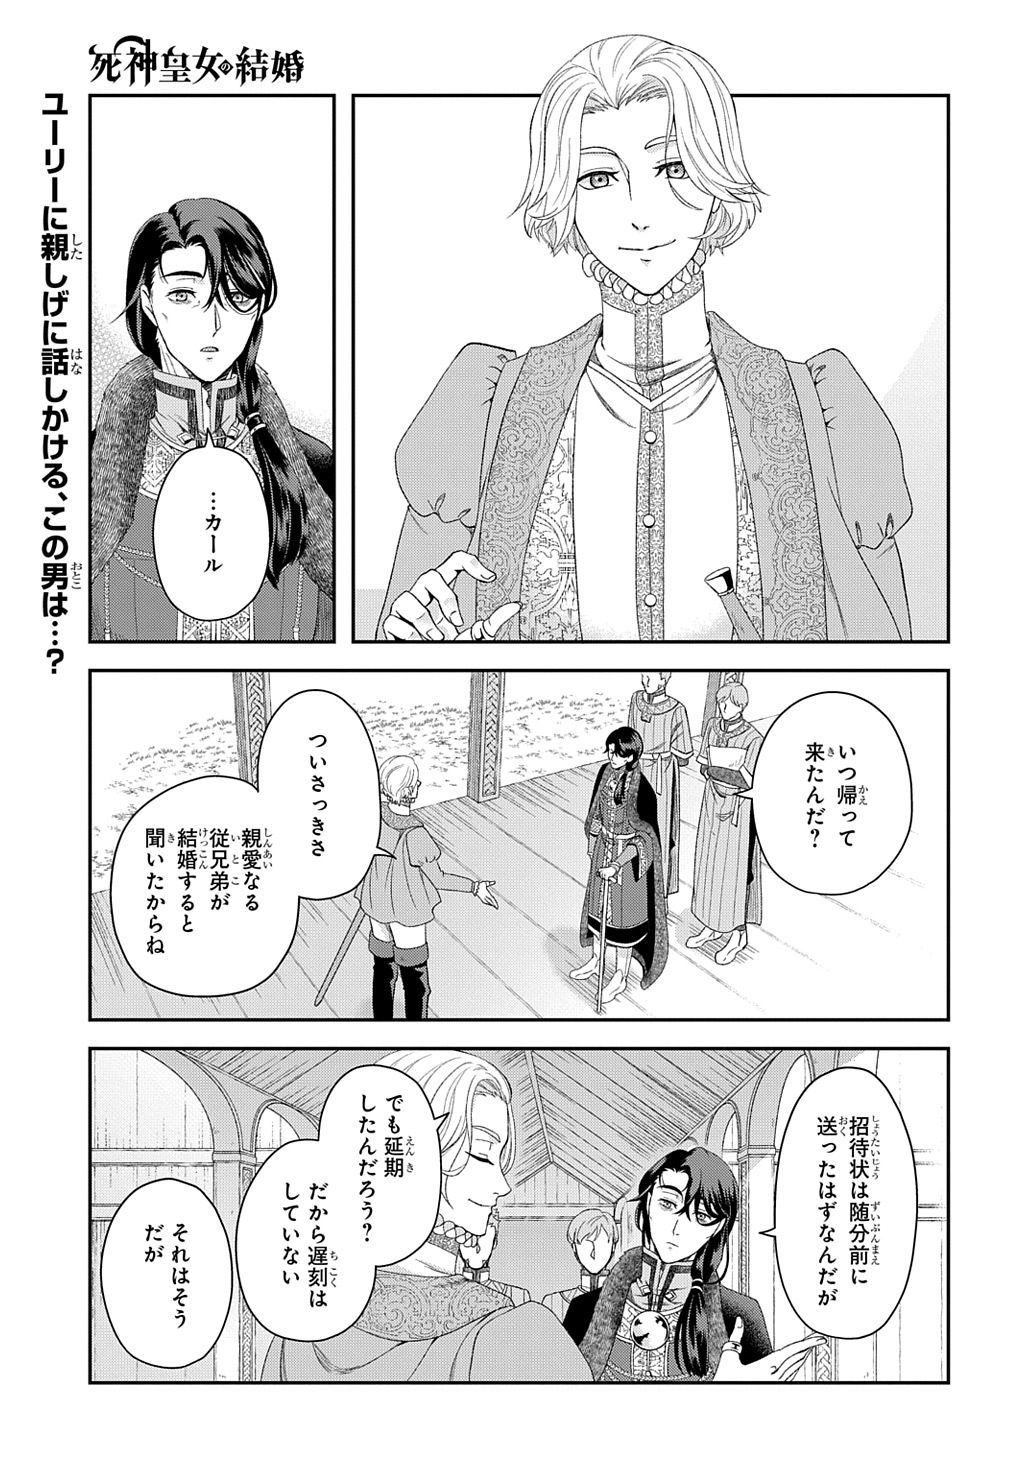 Shinigami Oujo no Kekkon - Chapter 4 - Page 1